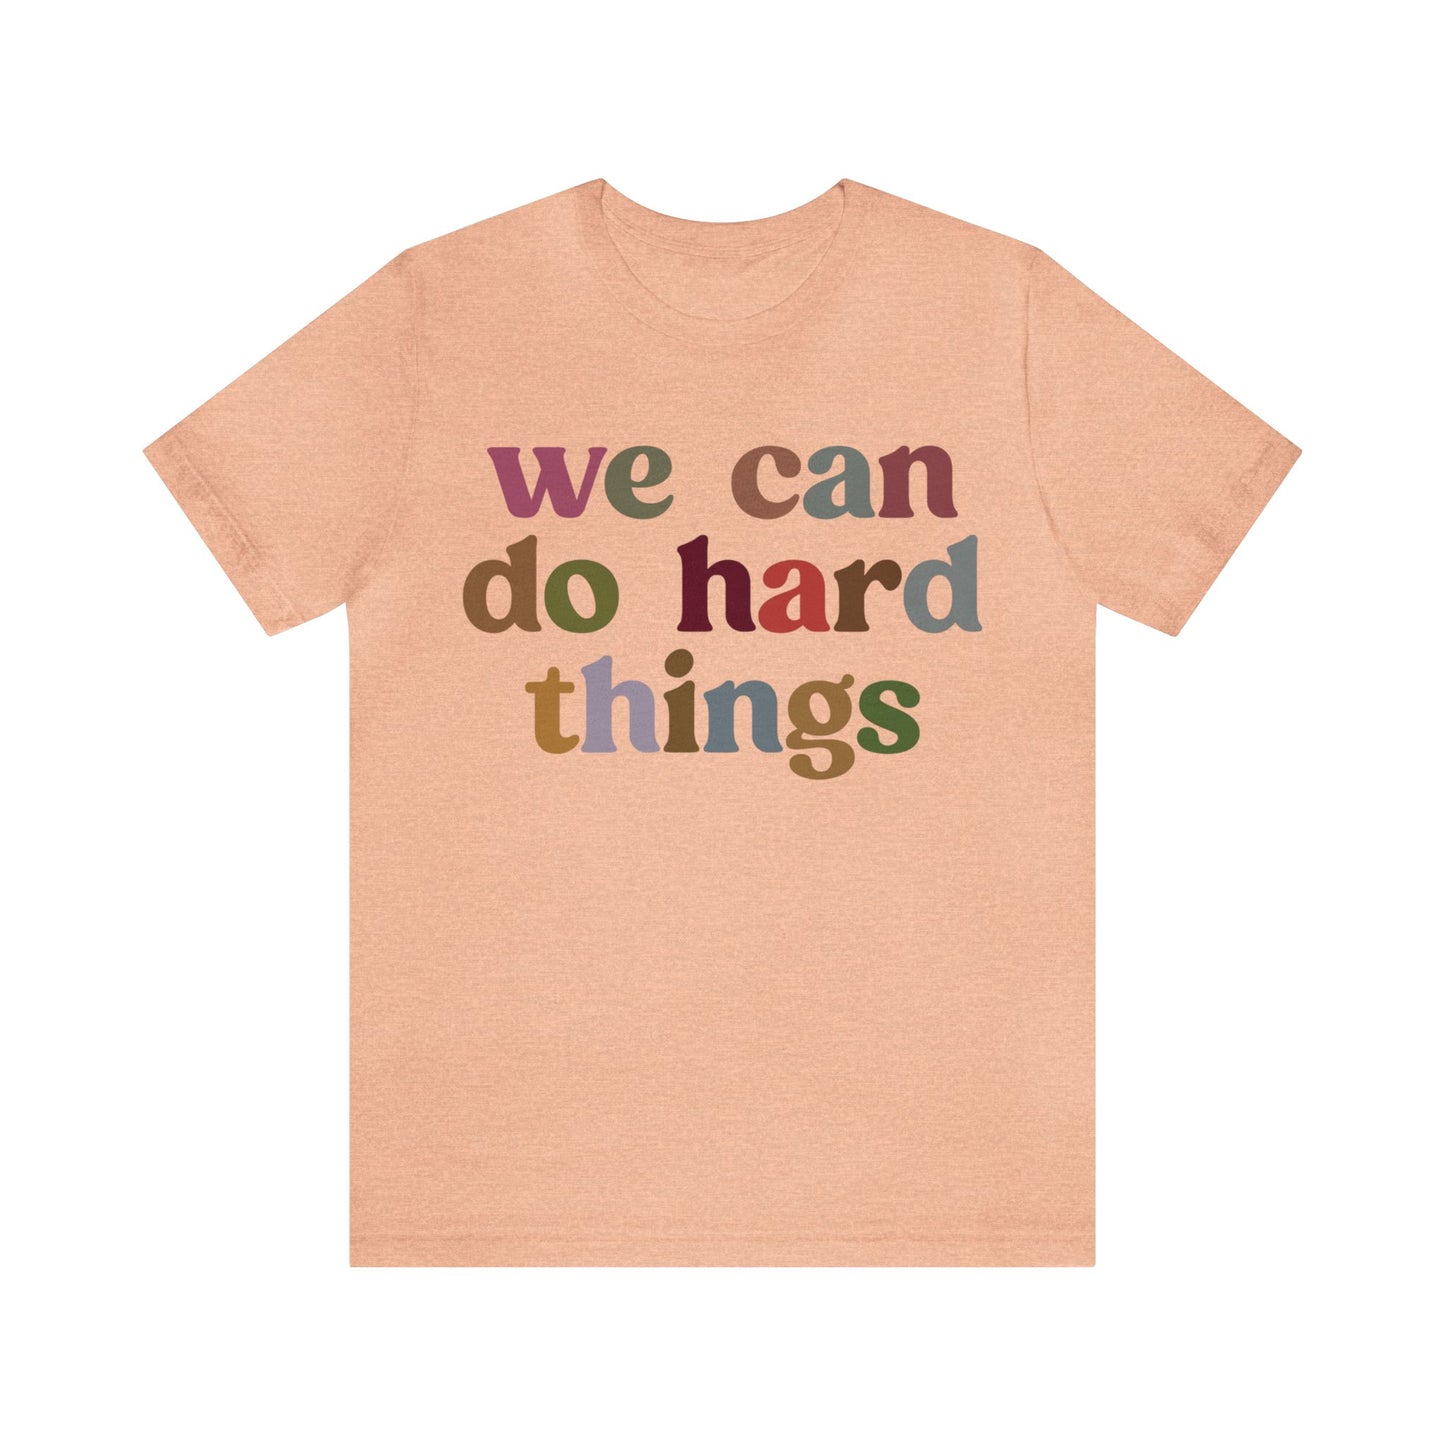 We Can Do Hard Things Shirt, Take a Risk Shirt, Strive Hard, State Testing Shirt, Aim High, Soar High, Inspirational Shirt for Women, T1467